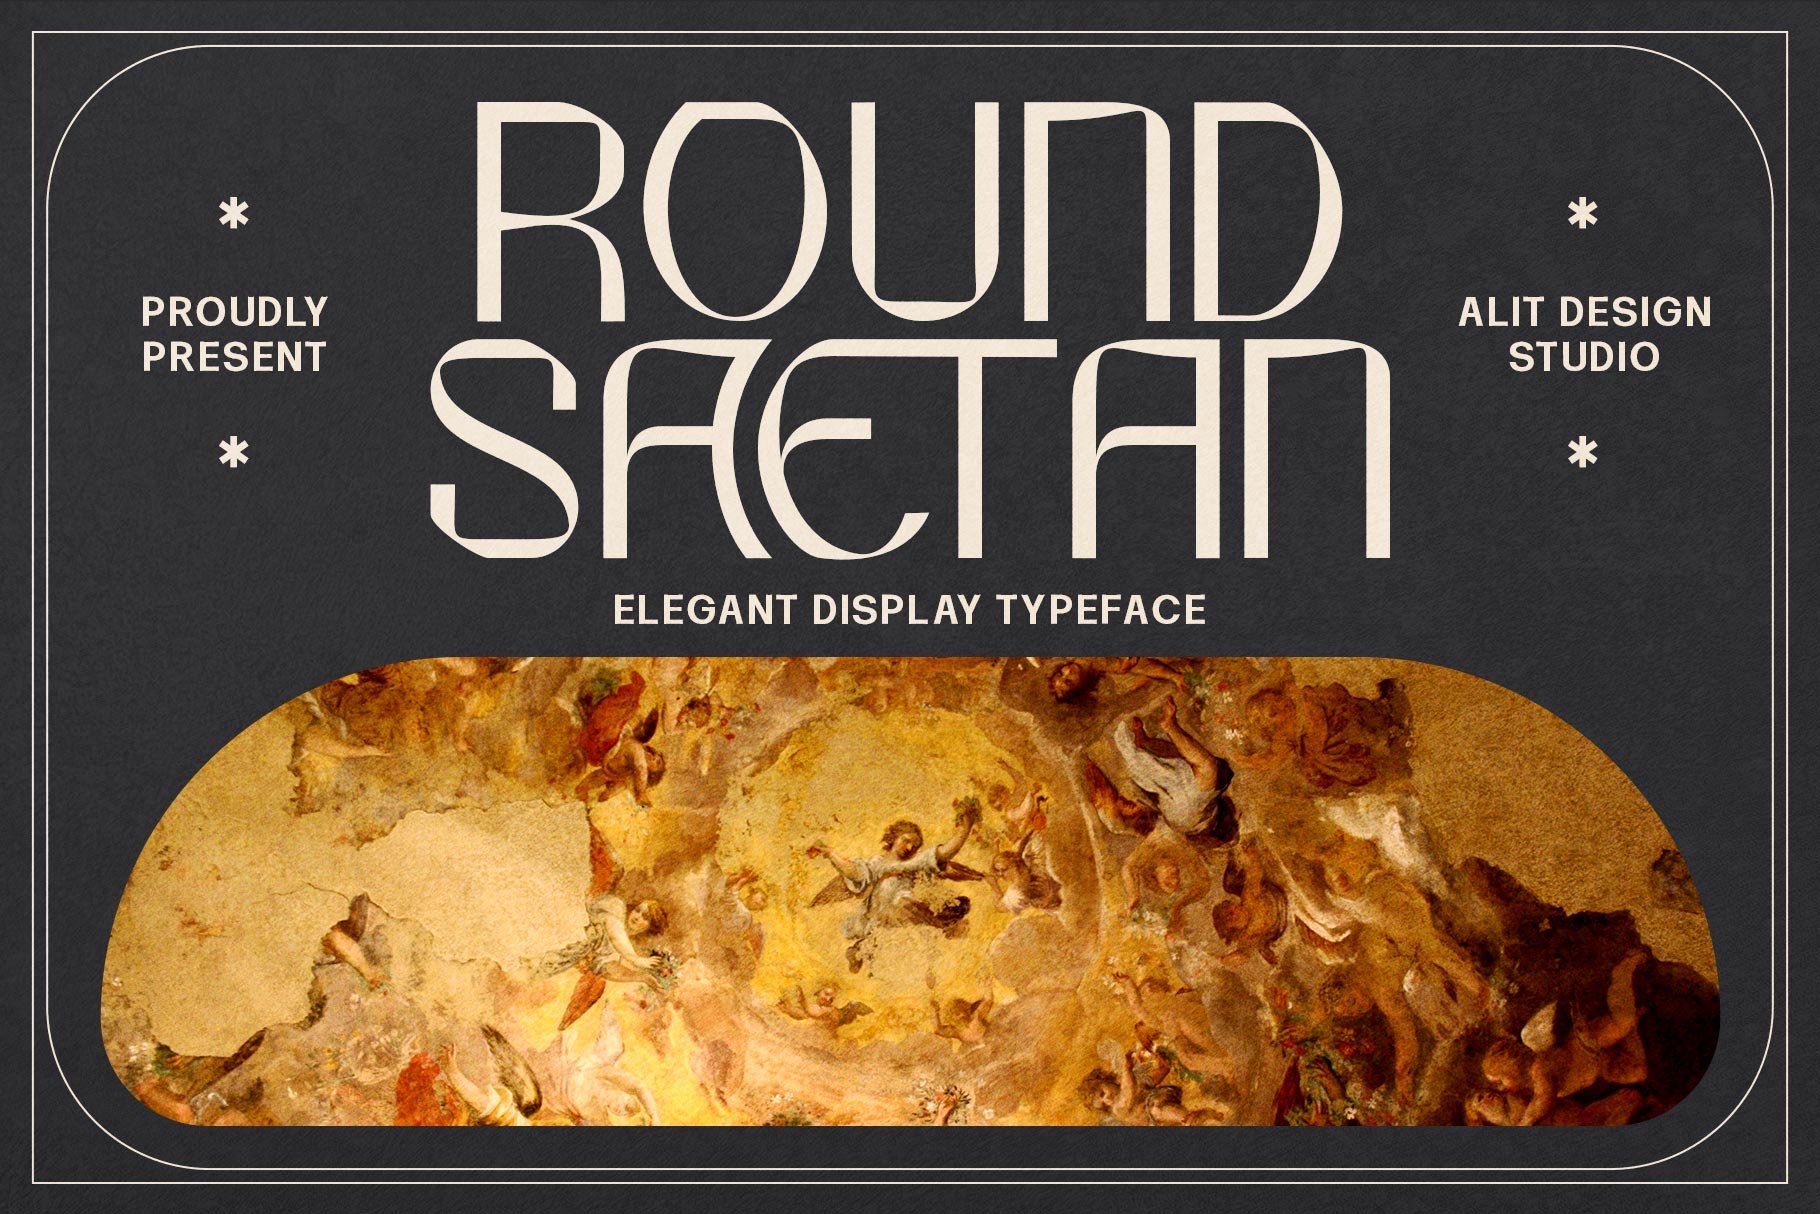 Round Saetan Typeface preview image.